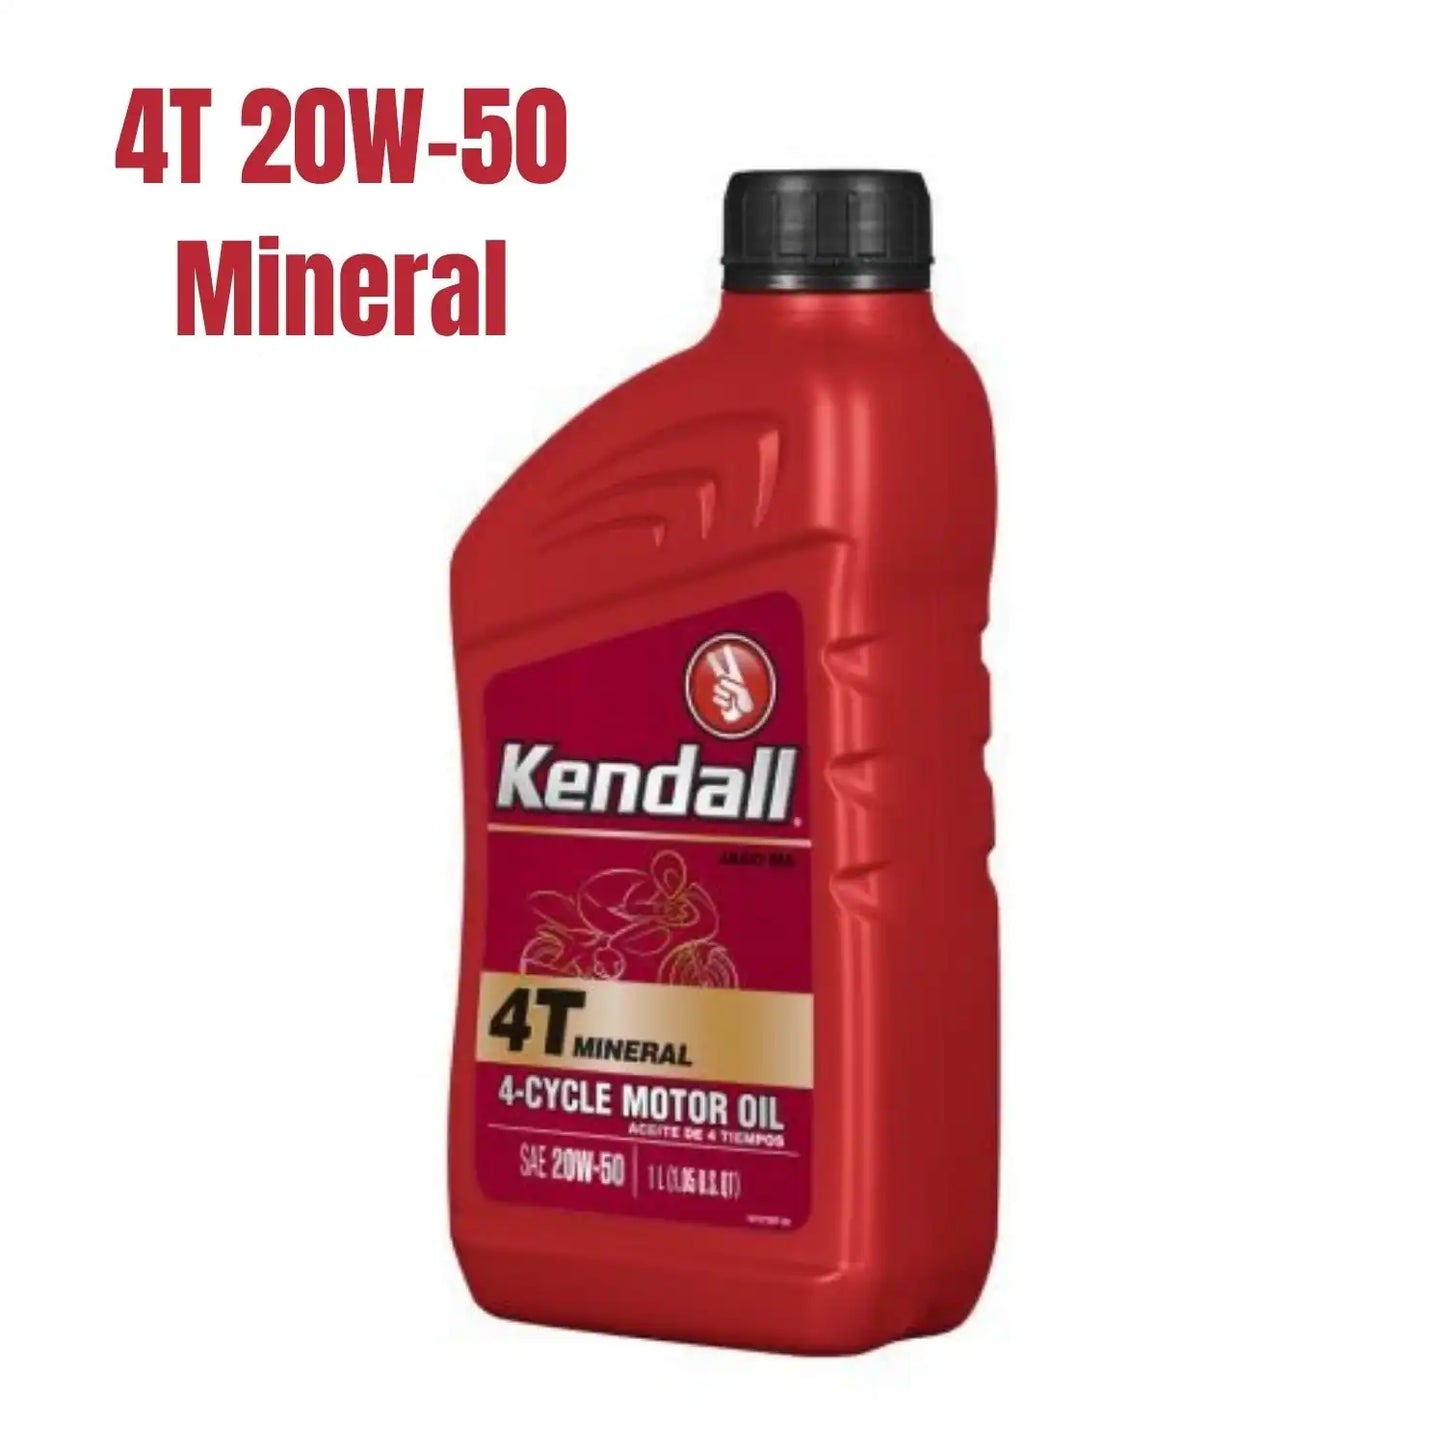 Kendall 4T 20W-50 Mineral Engine Oil (1 Liter)